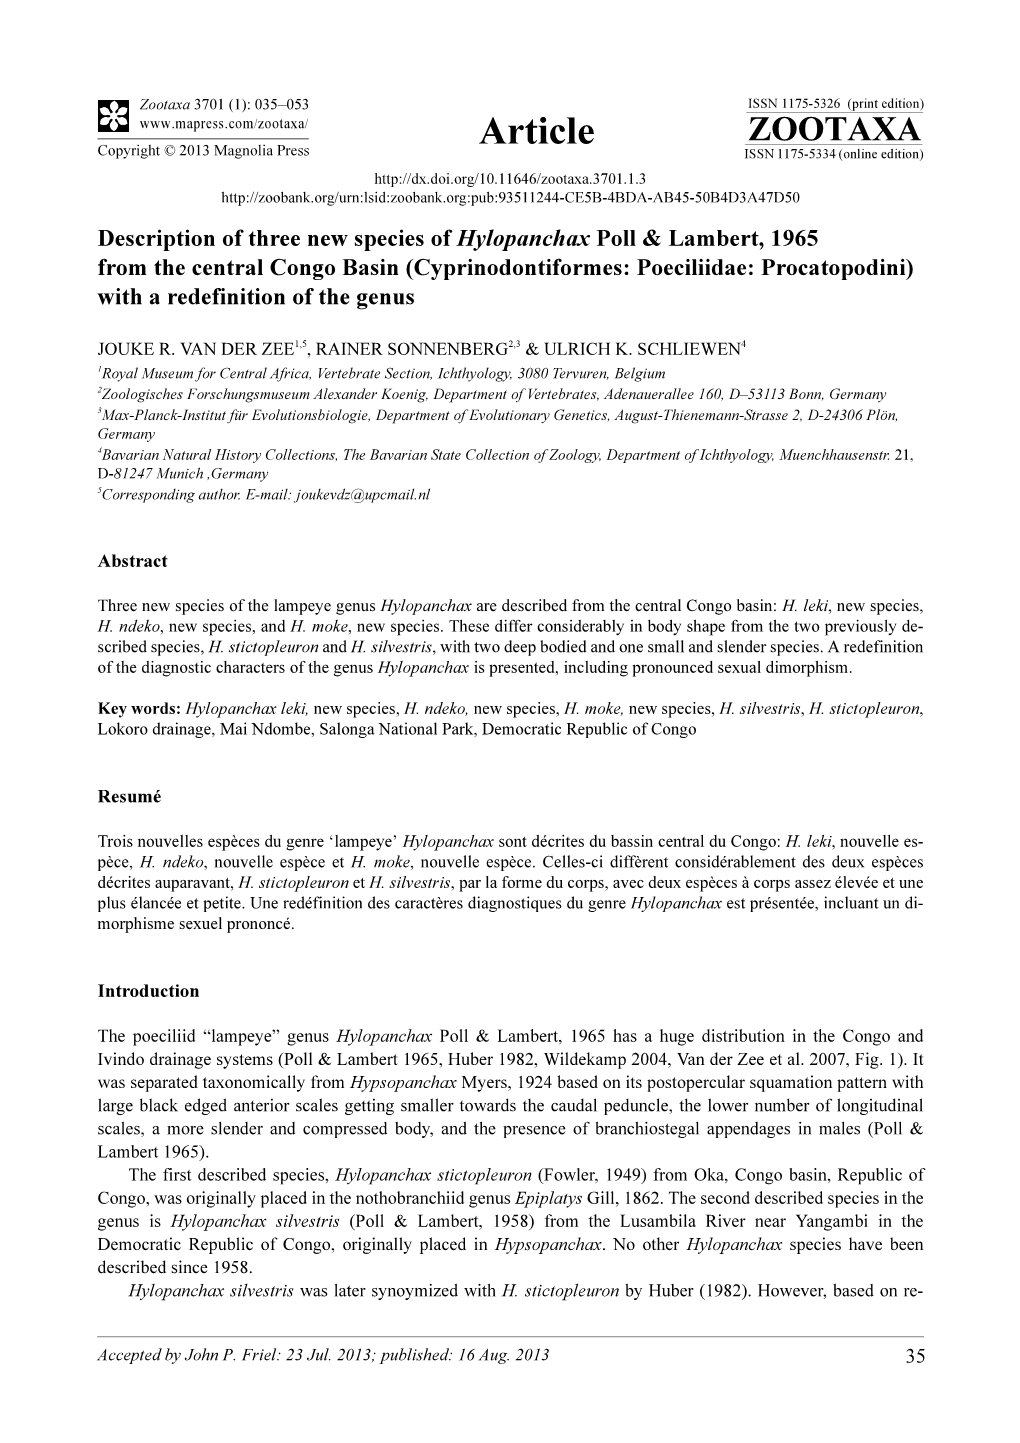 Description of Three New Species of Hylopanchax Poll & Lambert, 1965